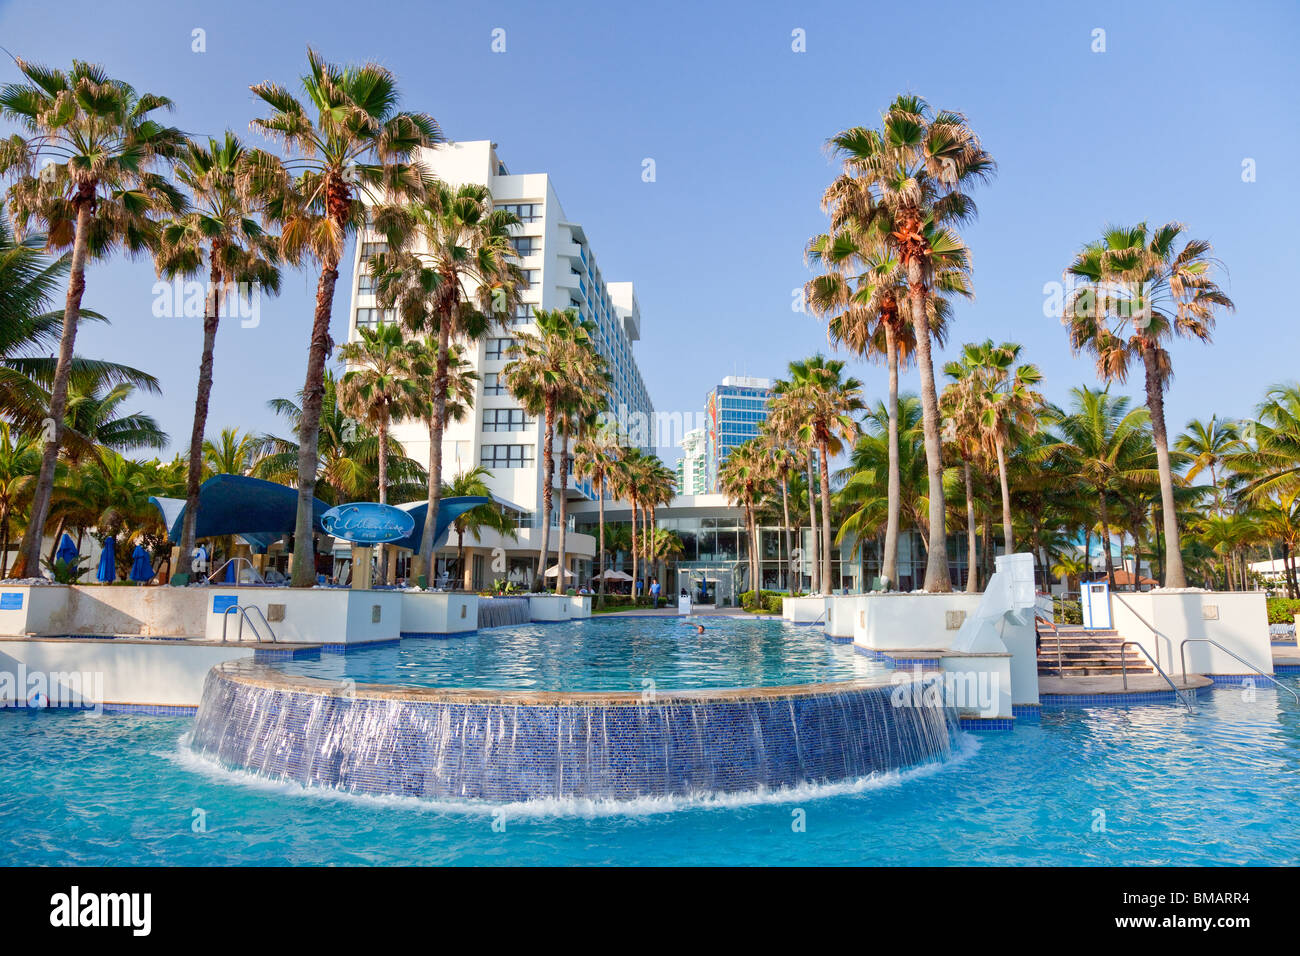 La piscine de l'hôtel Caribe Hilton Resort de San Juan, Puerto Rico, Caraïbes, Antilles. Banque D'Images